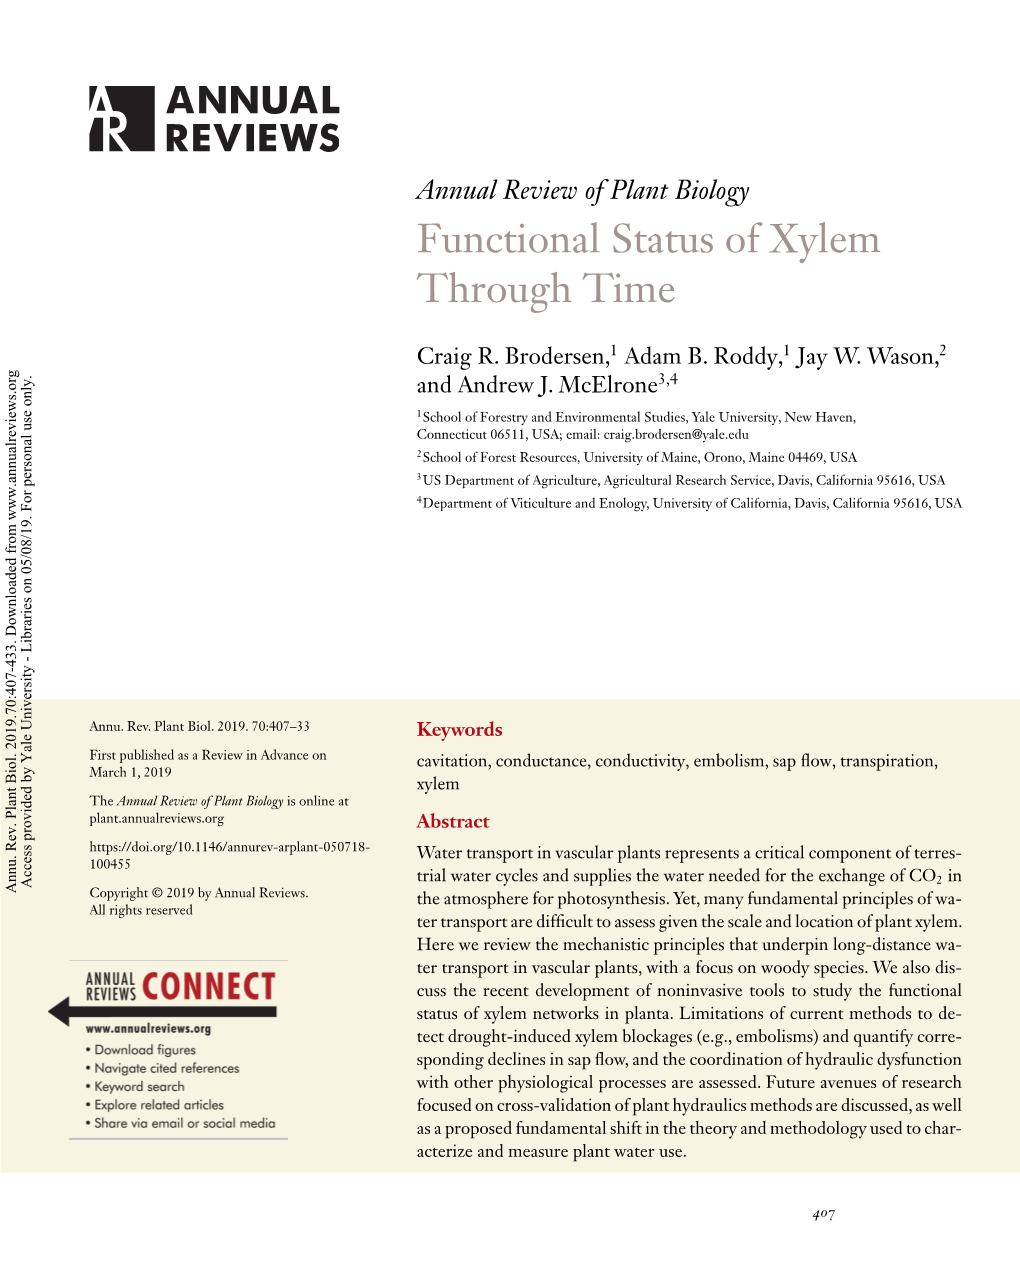 Functional Status of Xylem Through Time